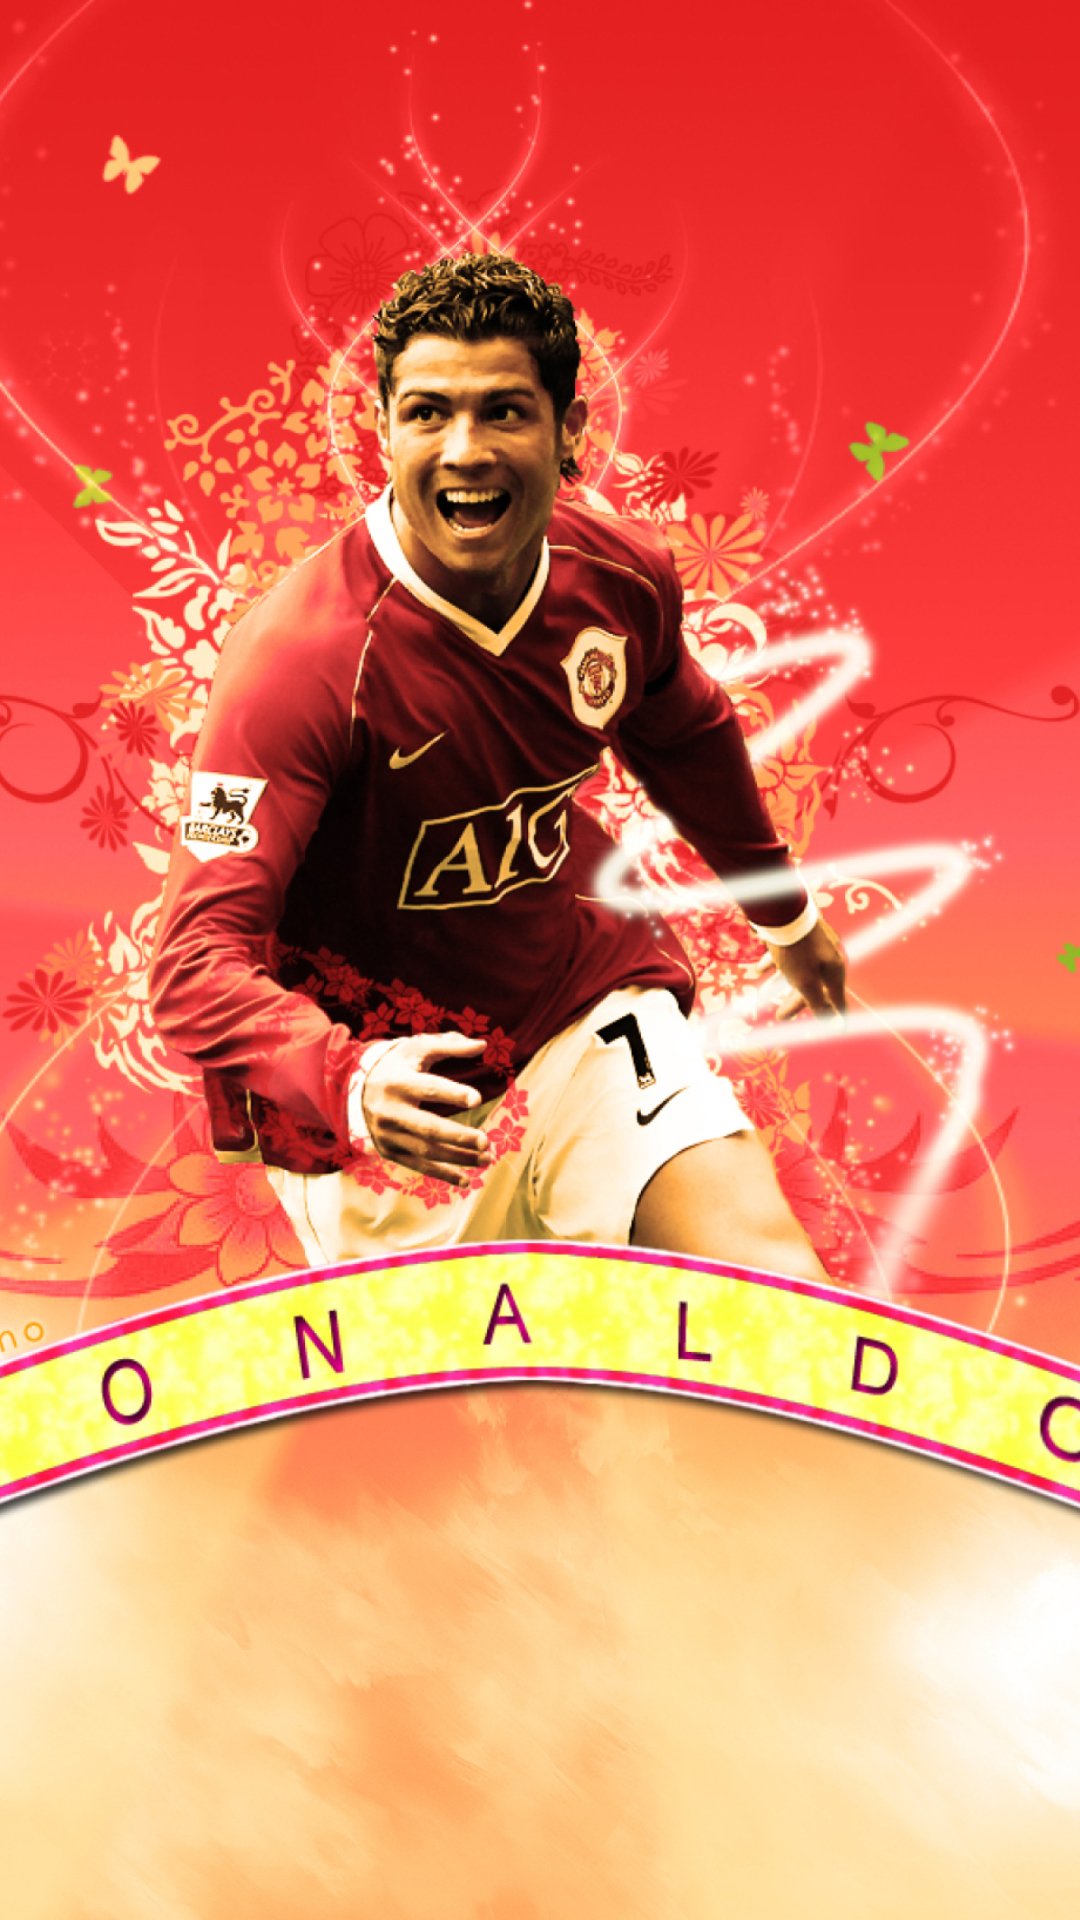 Cristiano Ronaldo Wallpaper for iPhone 6 Plus